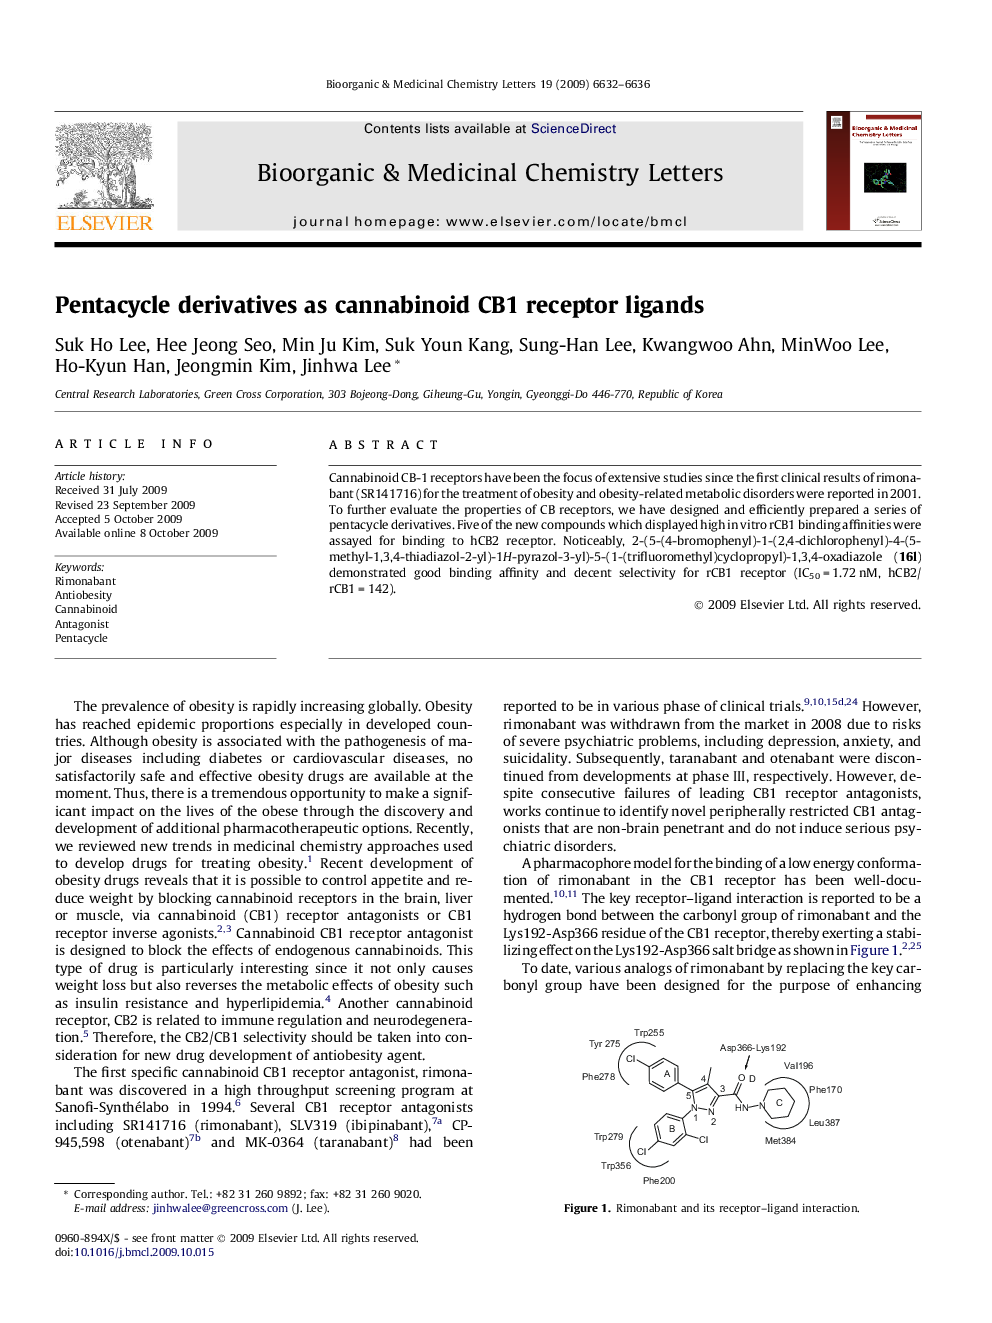 Pentacycle derivatives as cannabinoid CB1 receptor ligands